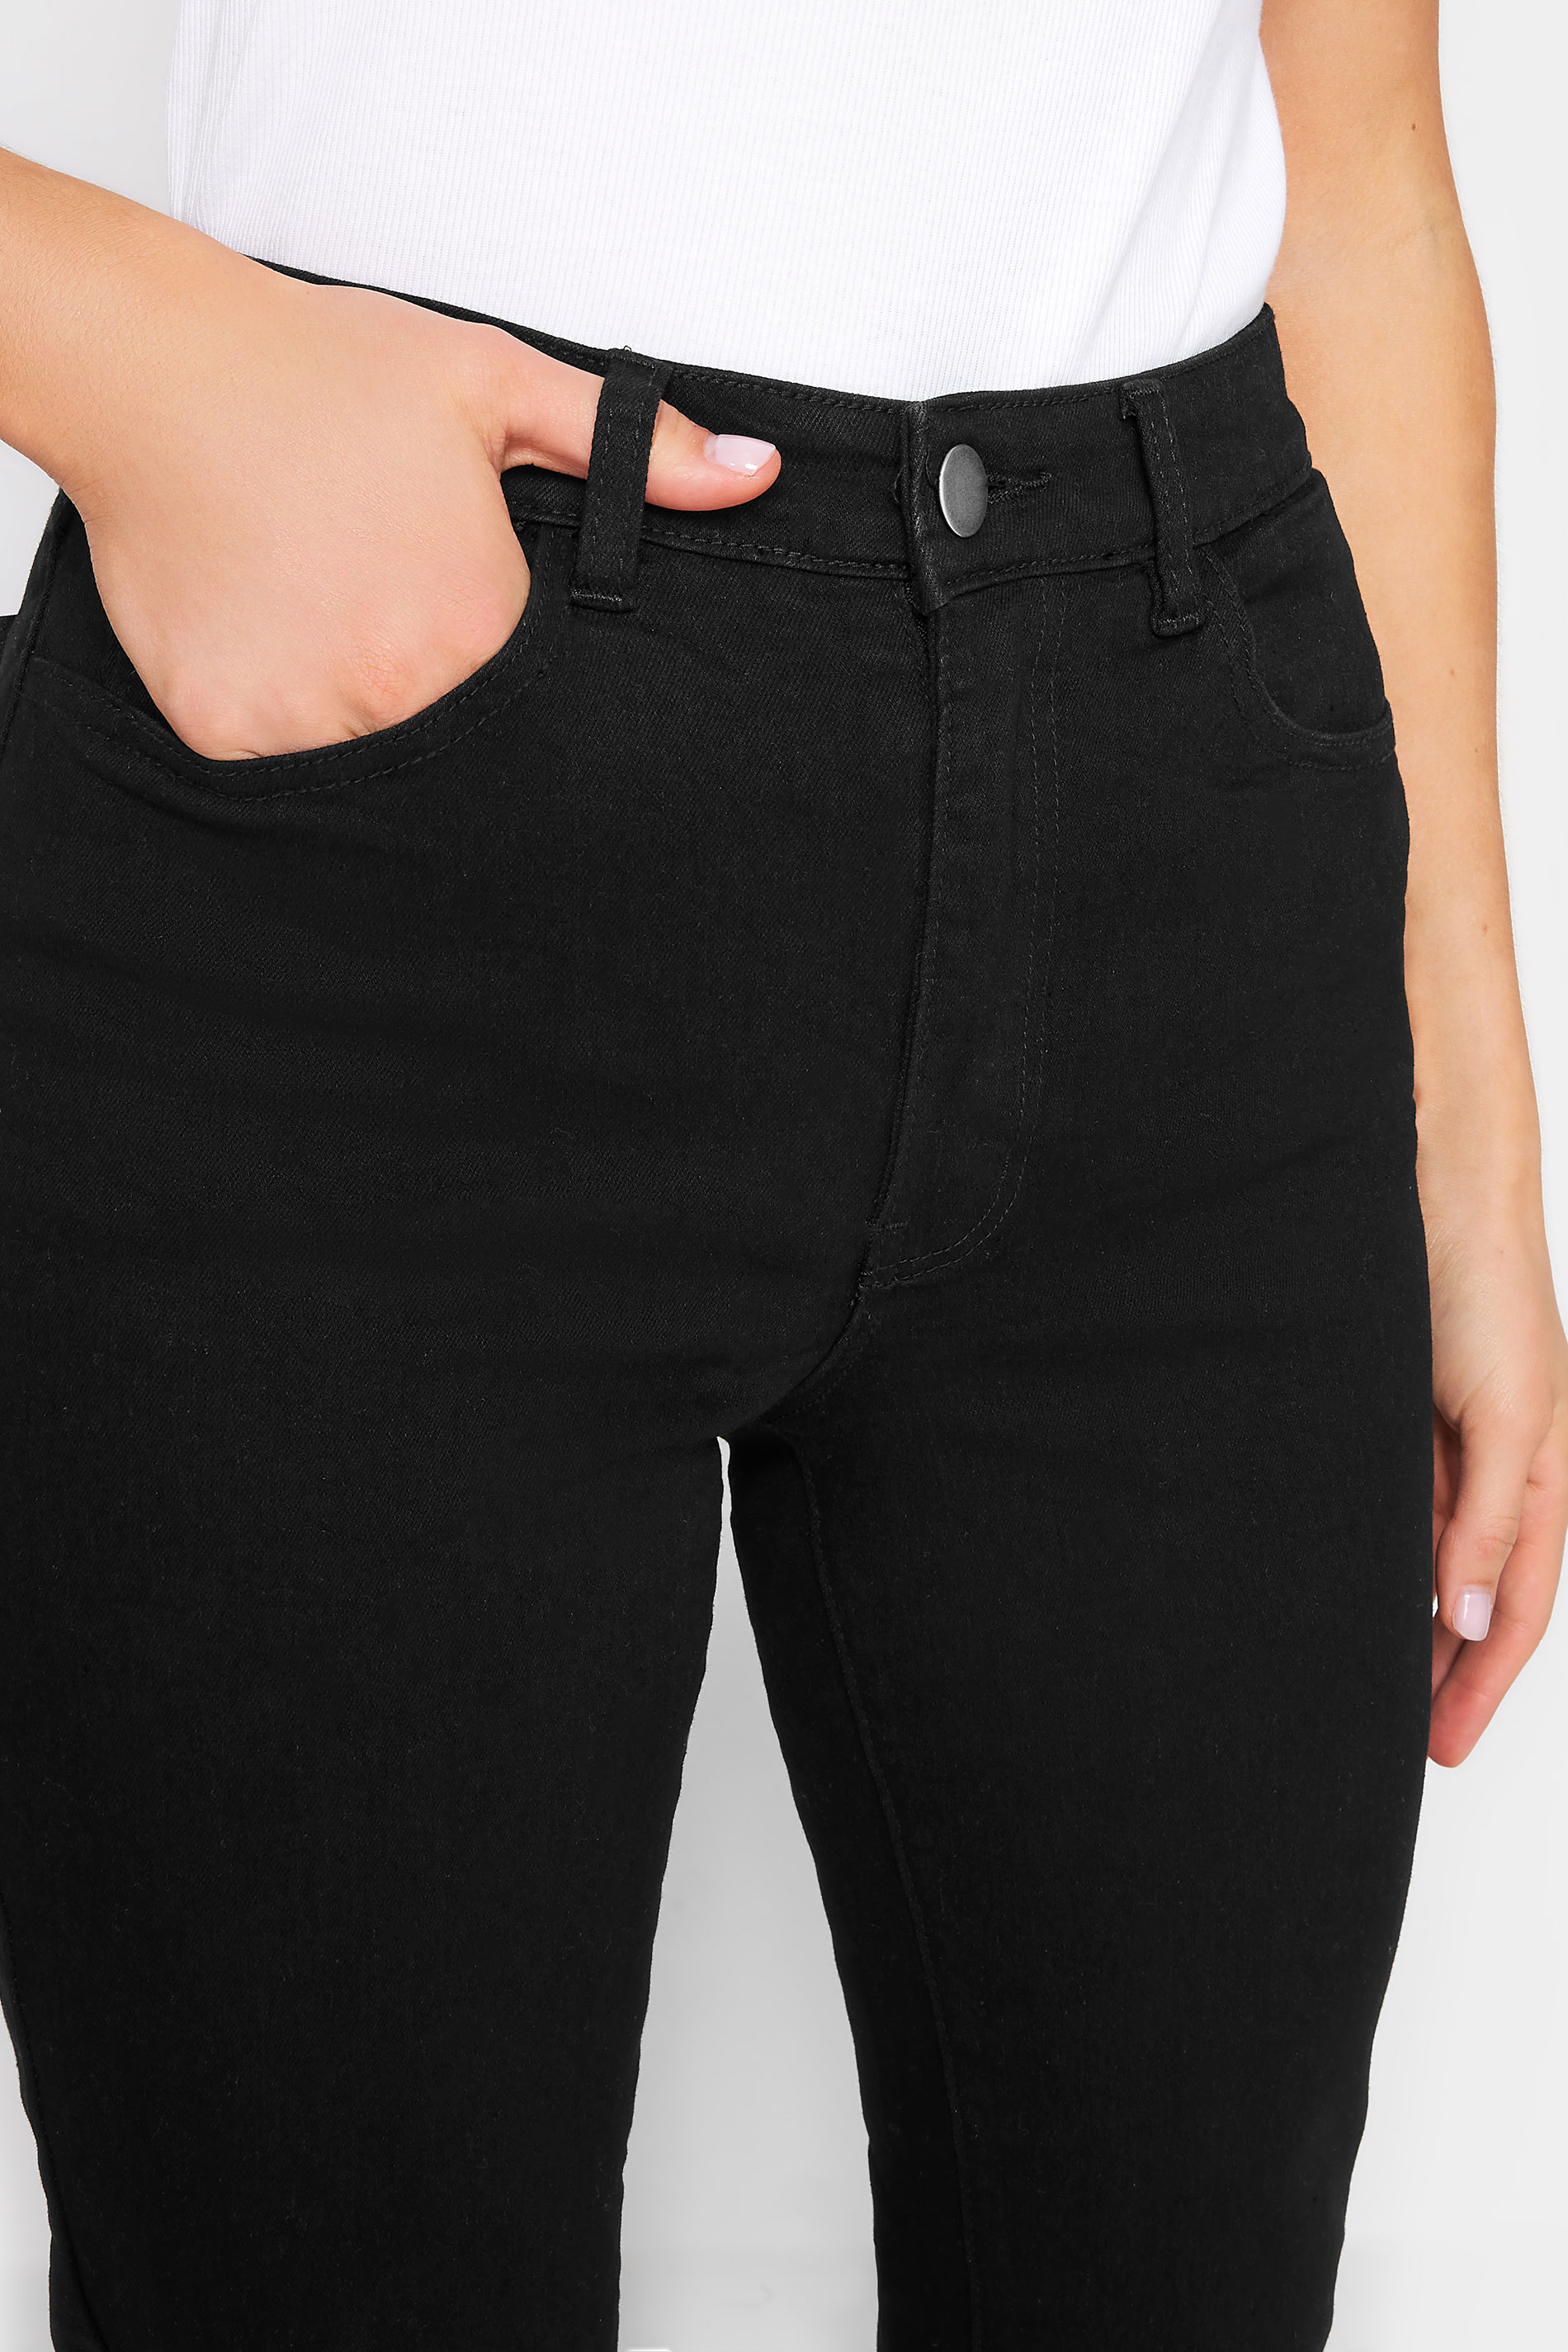 LTS Tall Women's Black Bootcut Jeans | Long Tall Sally 3